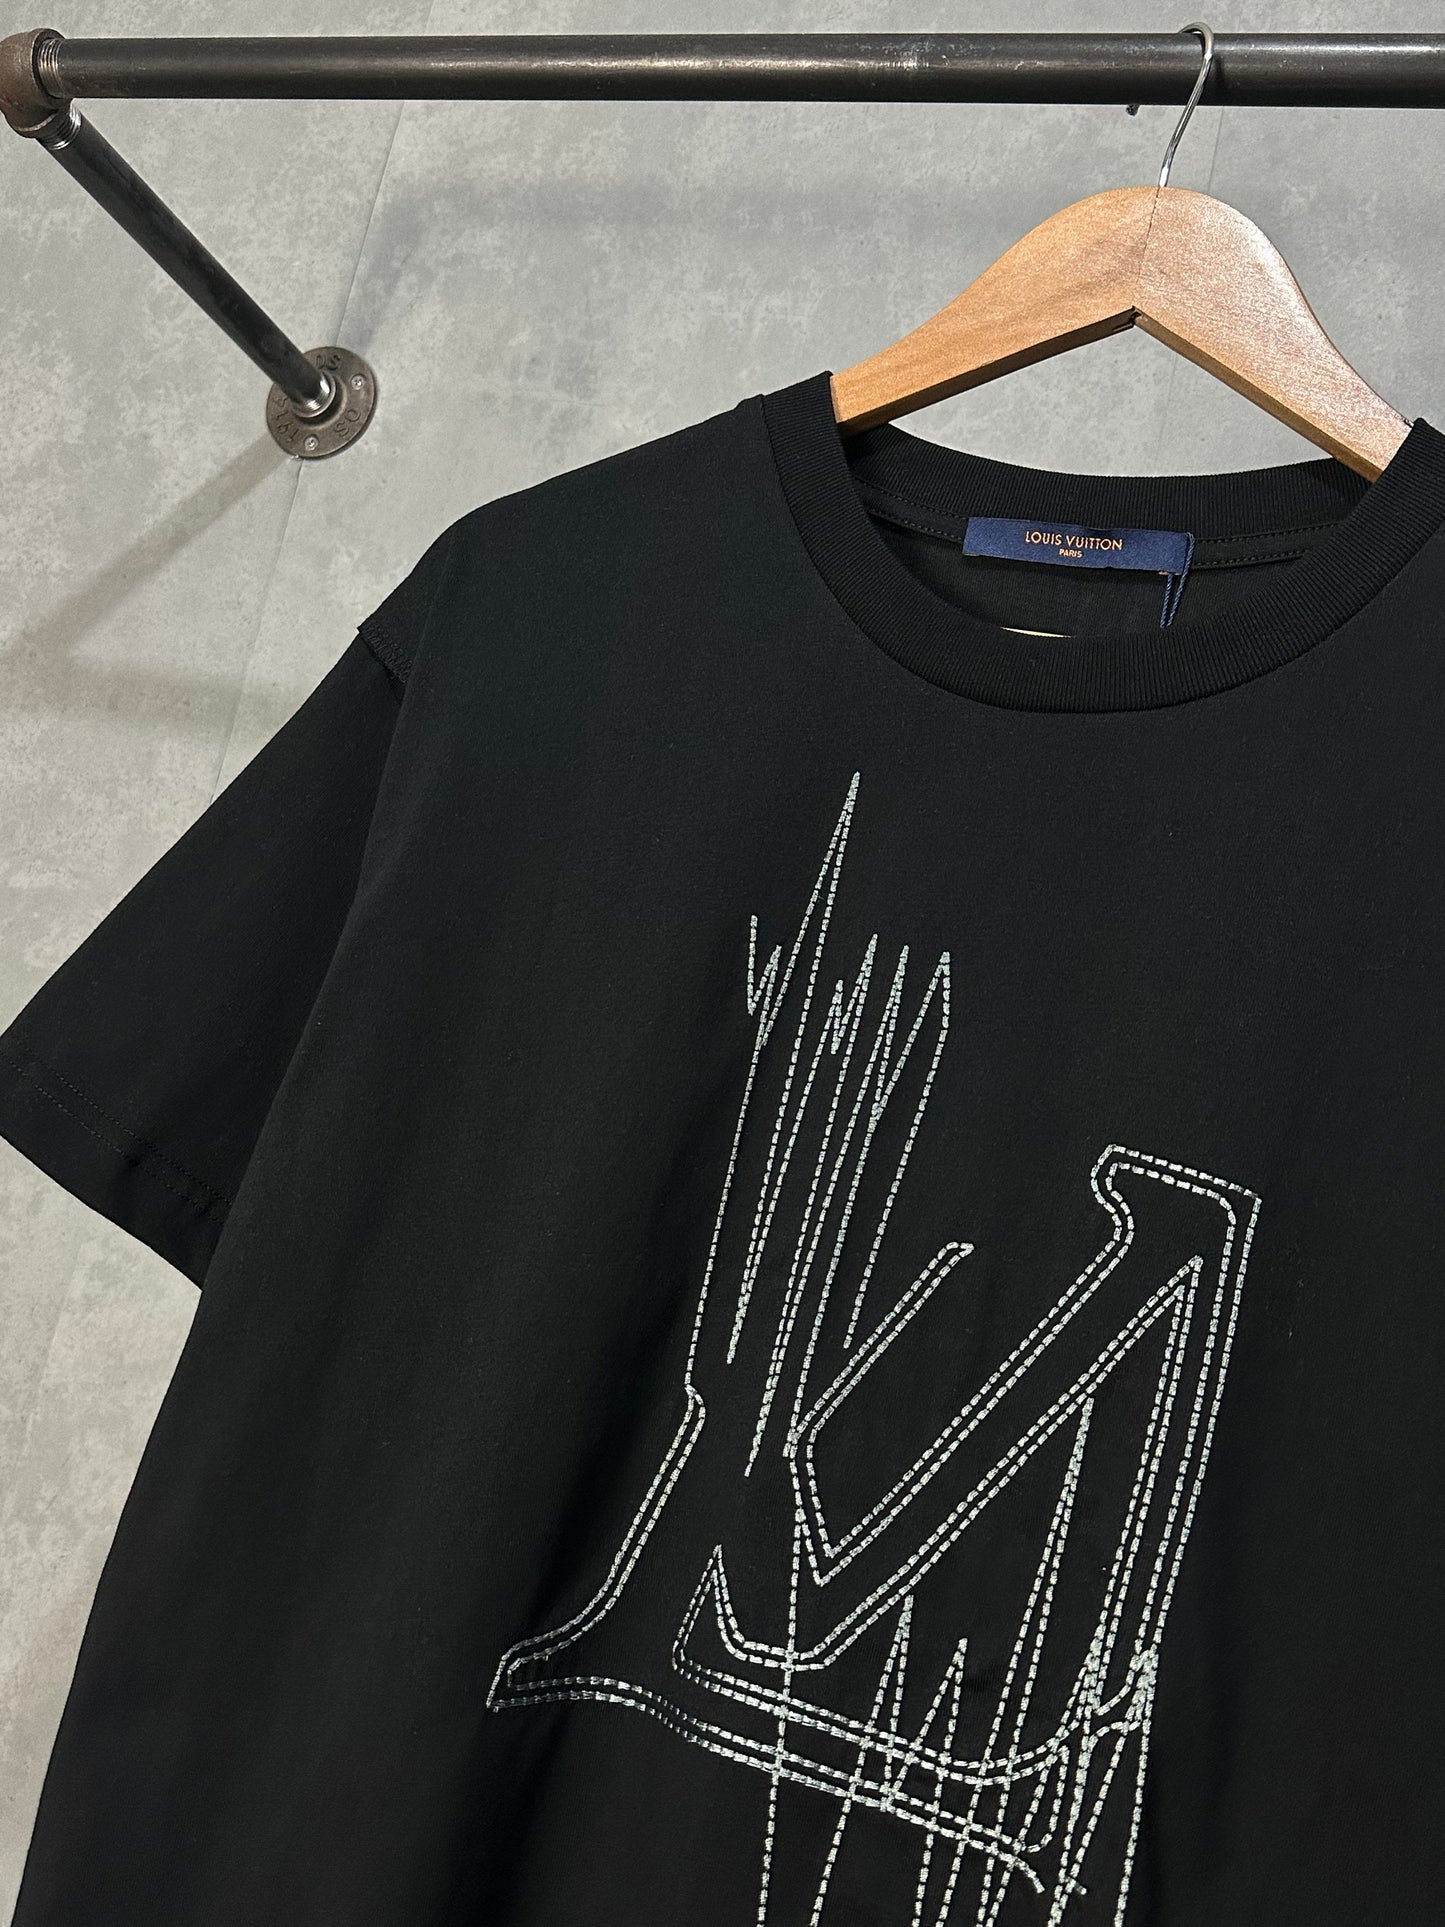 Louis Vuitton, Shirts, Like New Lv Frequency Graphic Tshirt